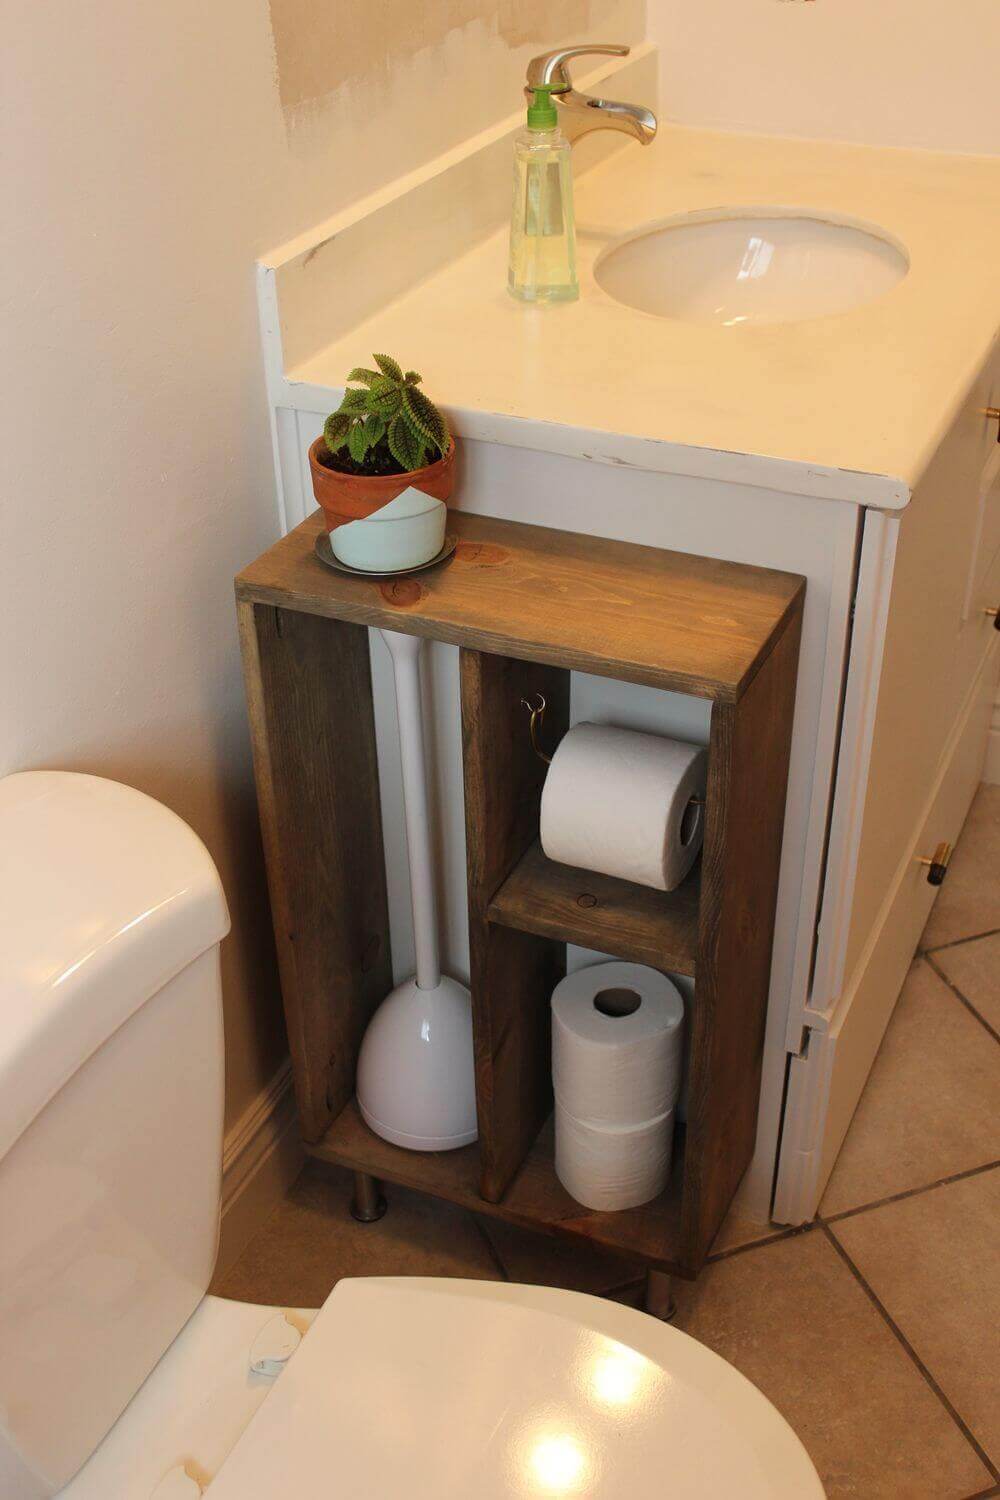 Bathroom Storage Ideas Small Sink-Side Cabinet - Harptimes.com